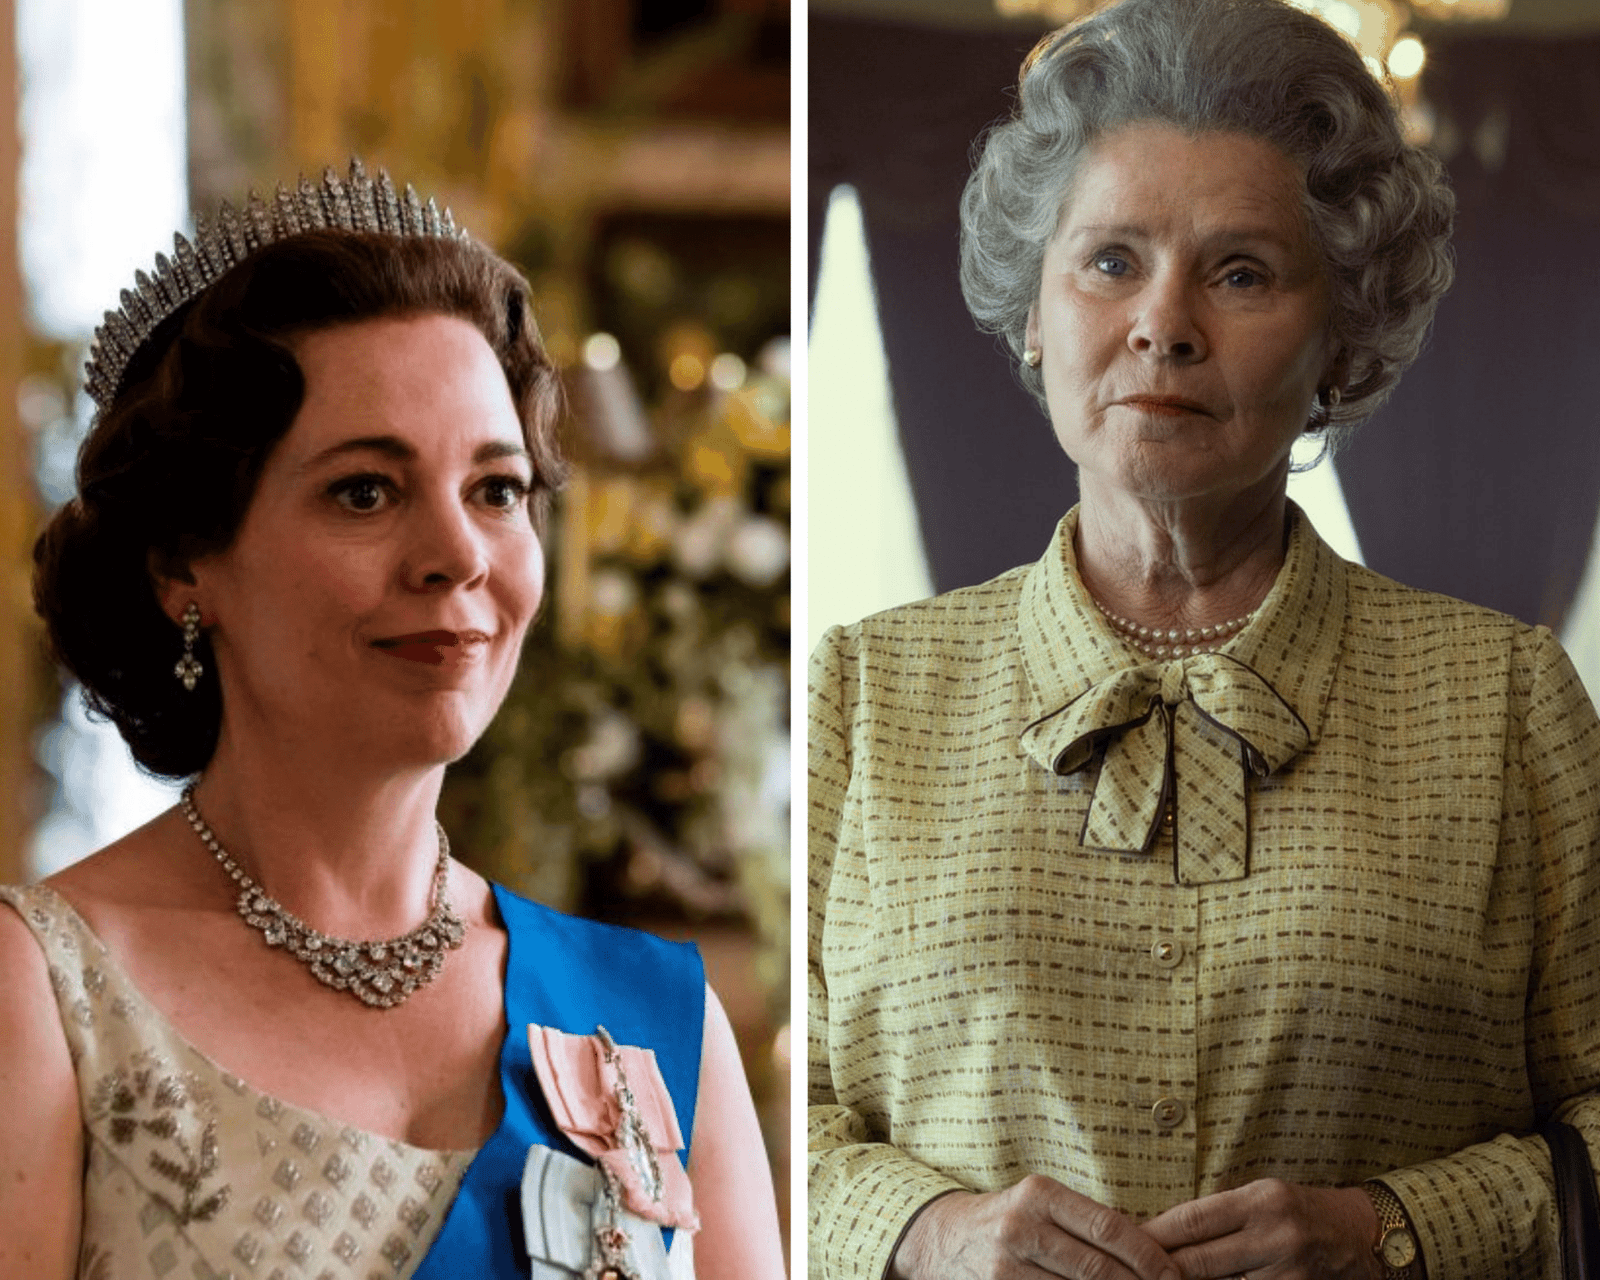 The Crown Season 5 Cast - Olivia Colman and Imelda Staunton as Queen Elizabeth II